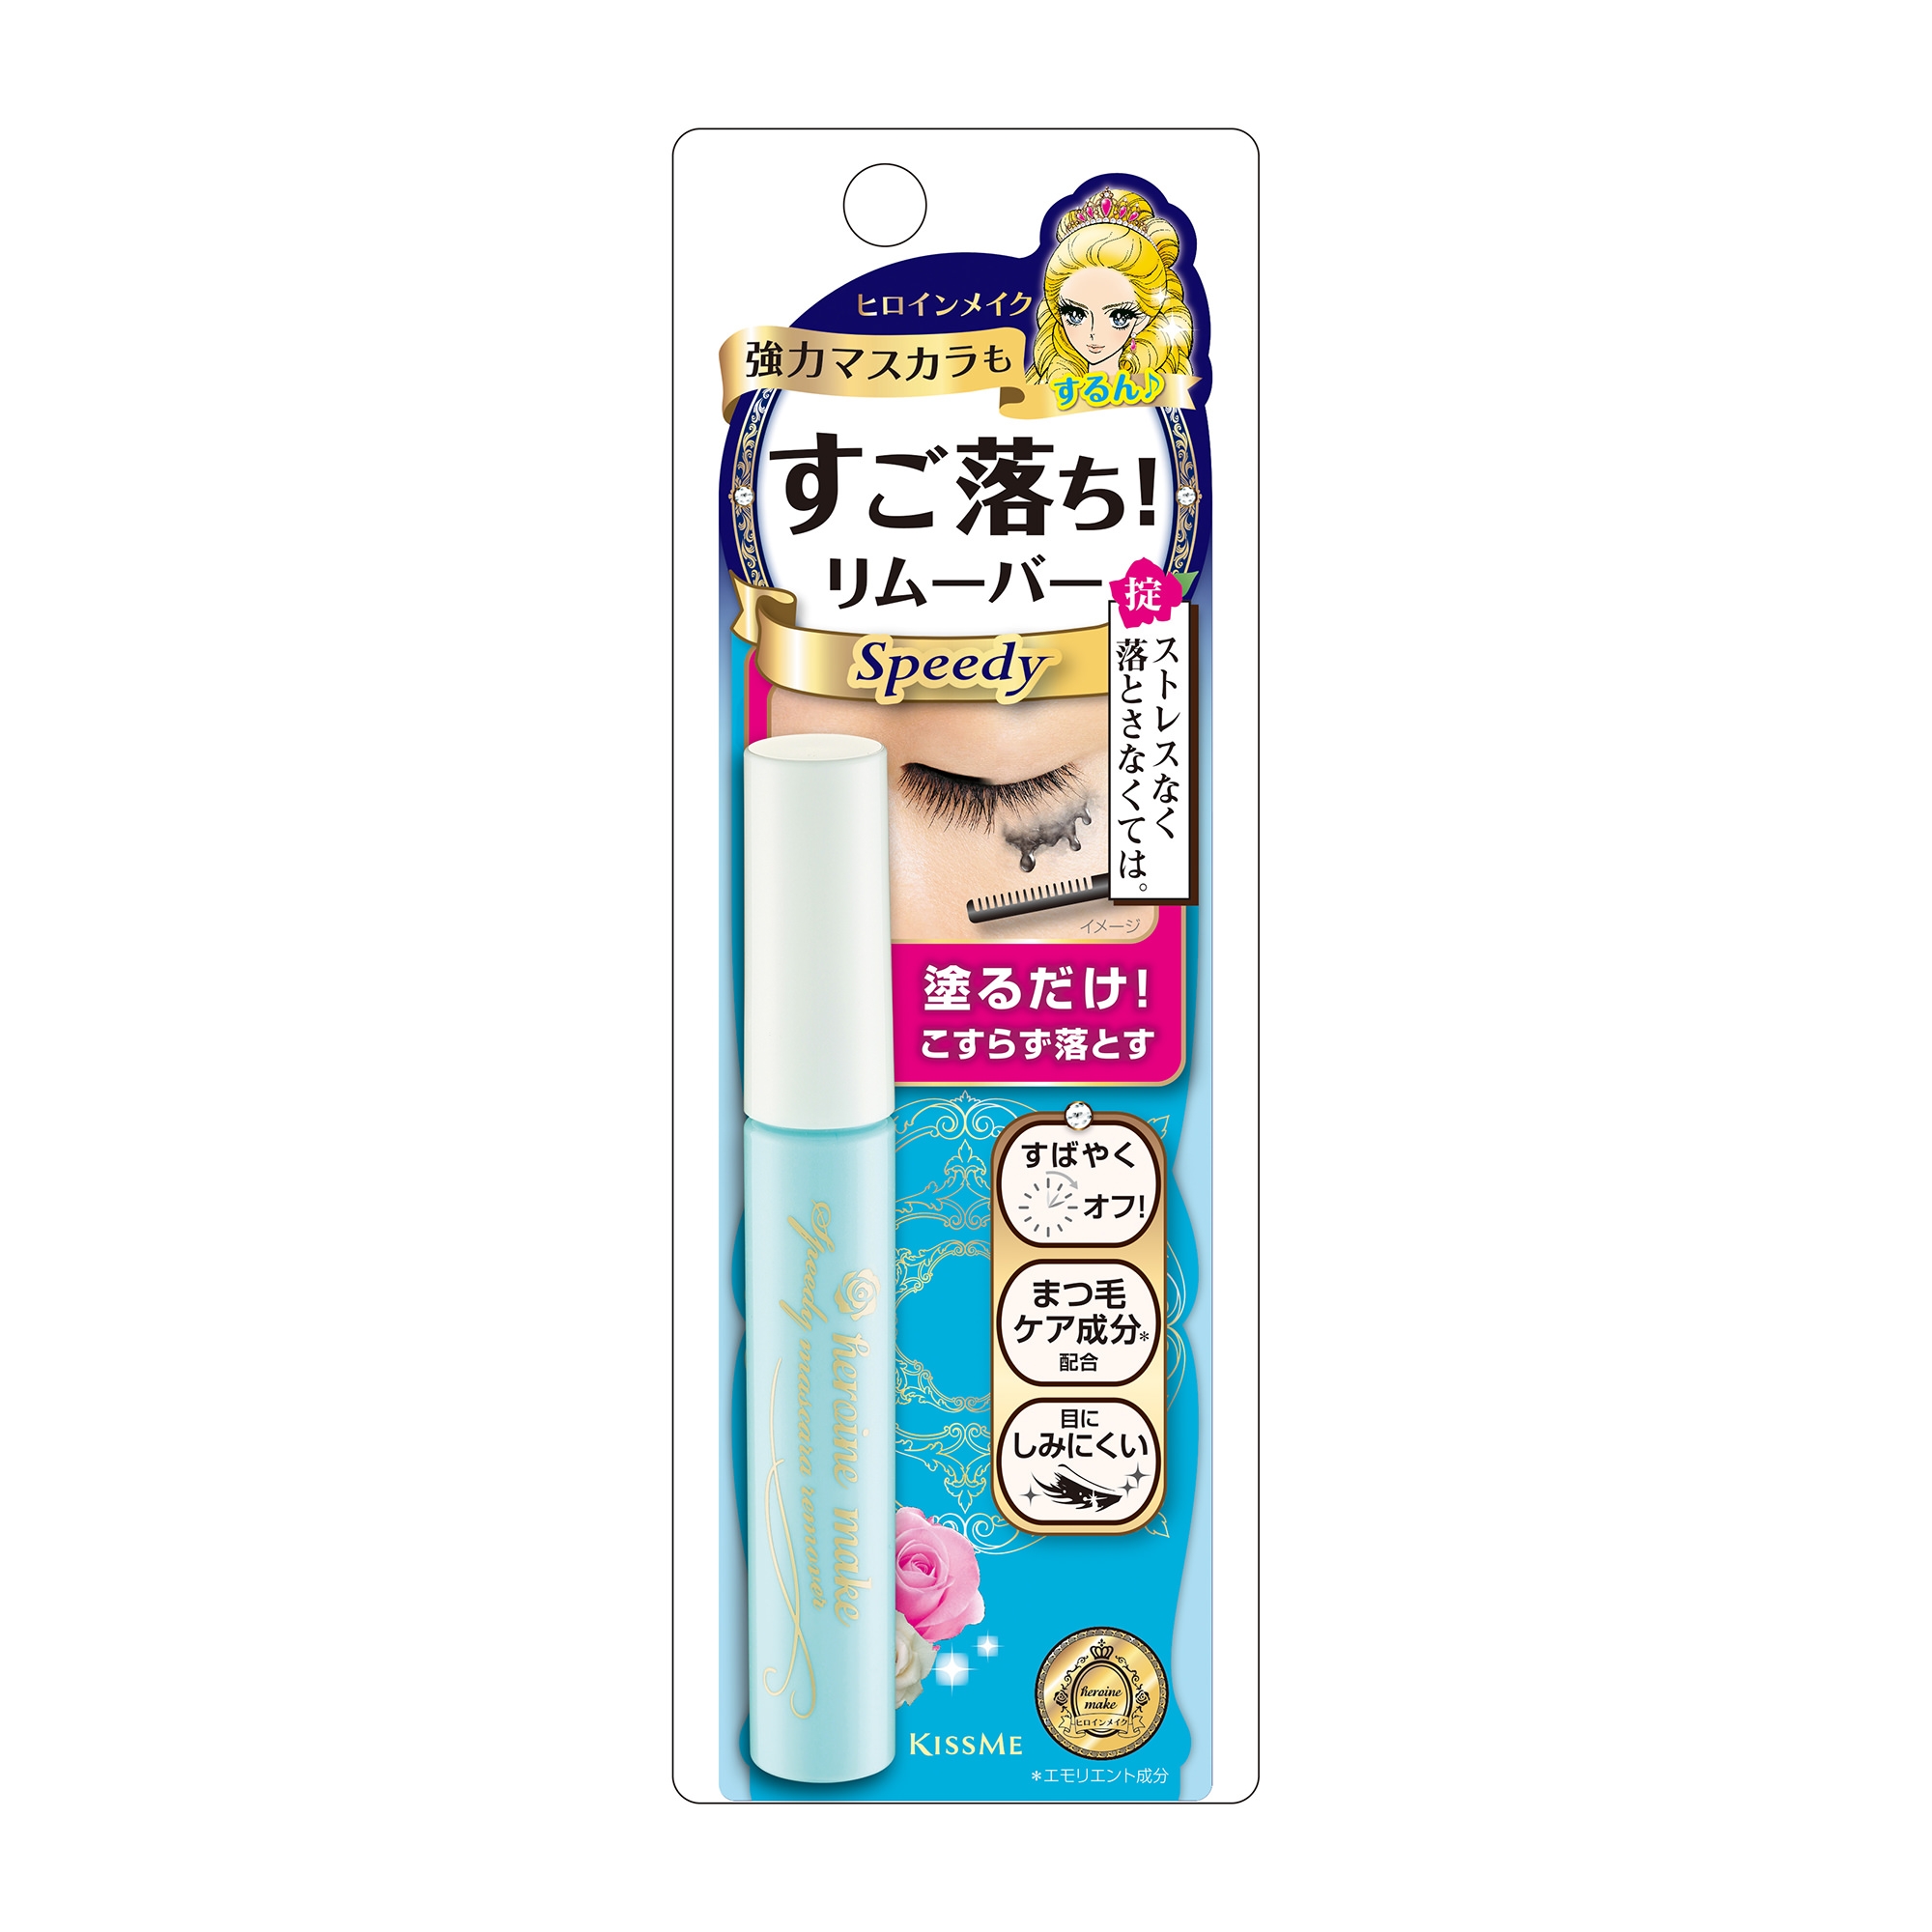 Product-kissme-睫毛膏卸妆液